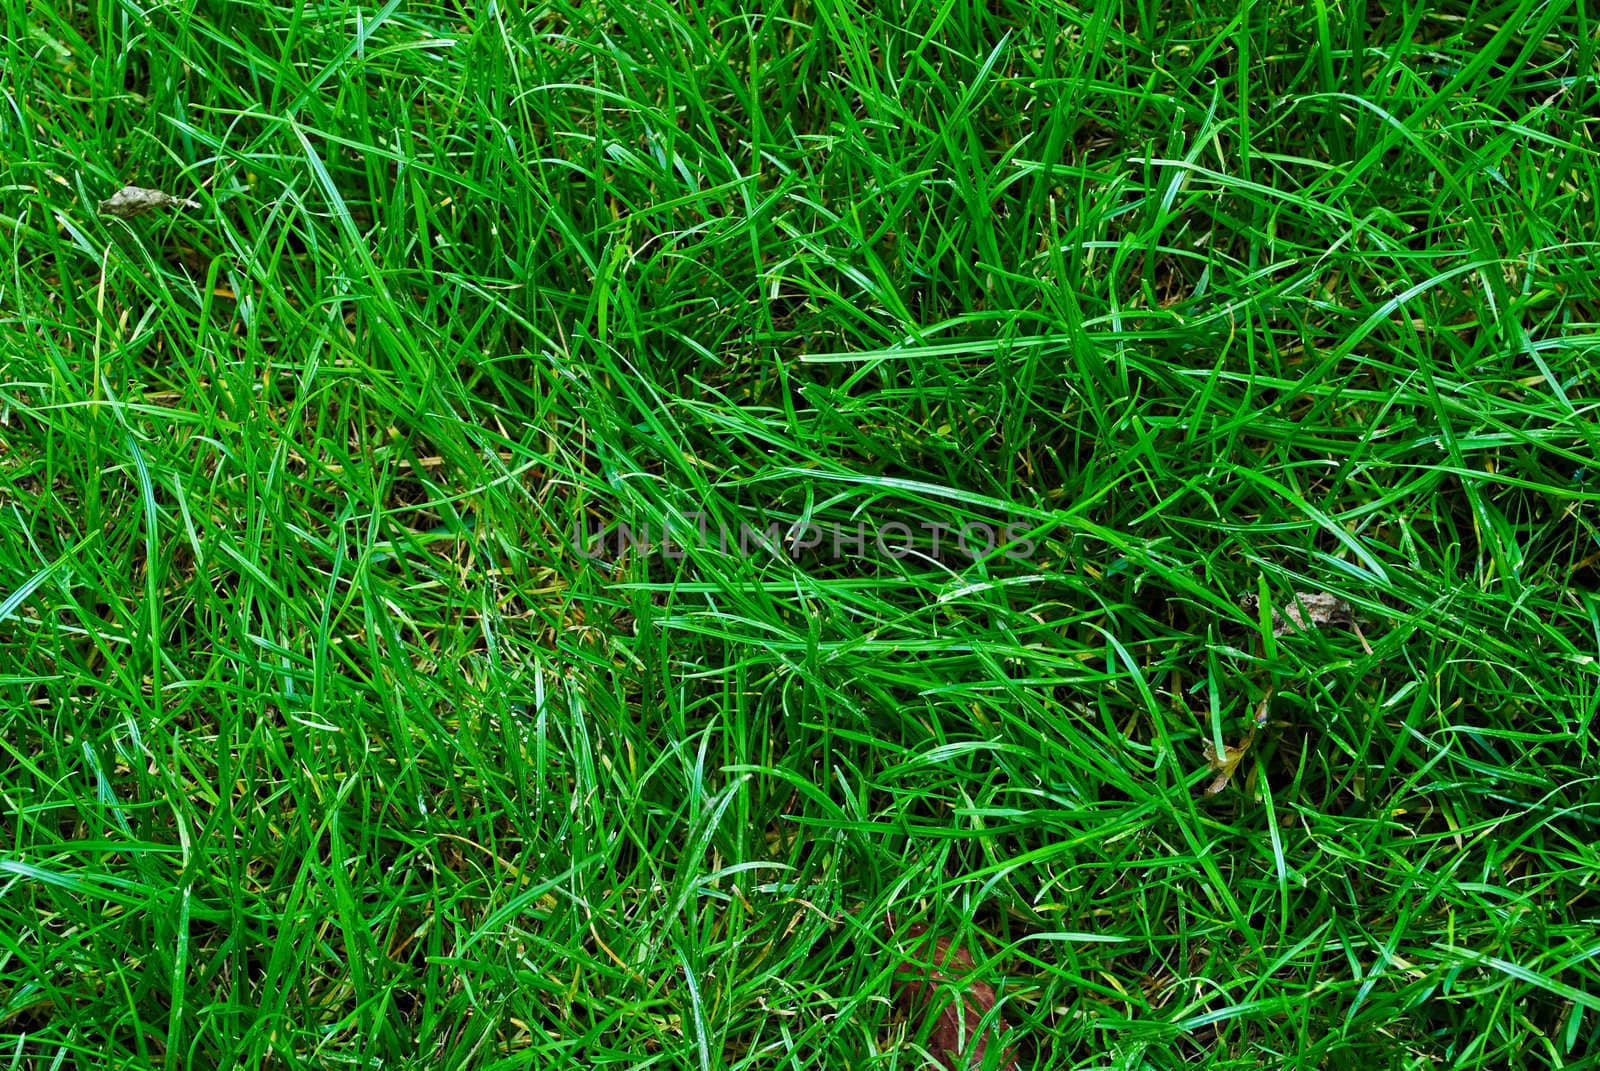 Green grass pattern by robertblaga